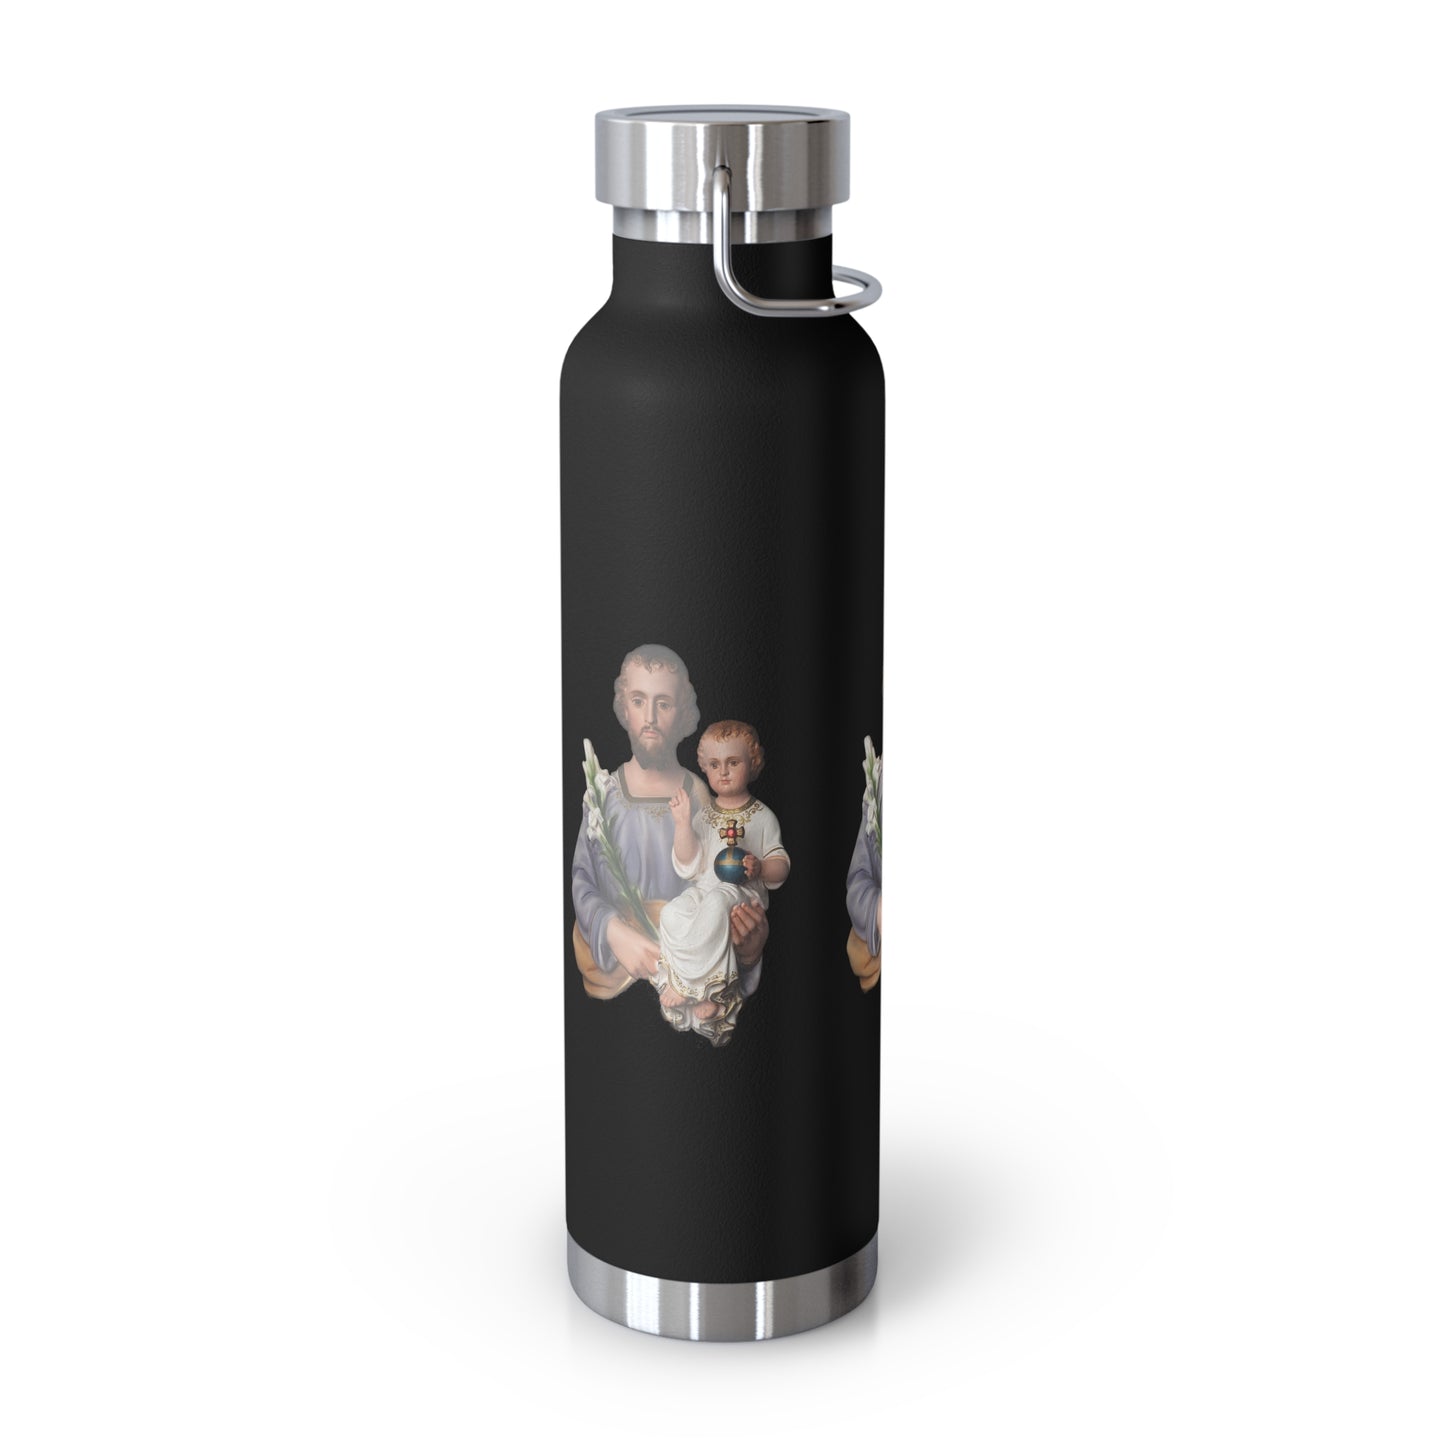 St Joseph Copper Vacuum Insulated Bottle, 22oz